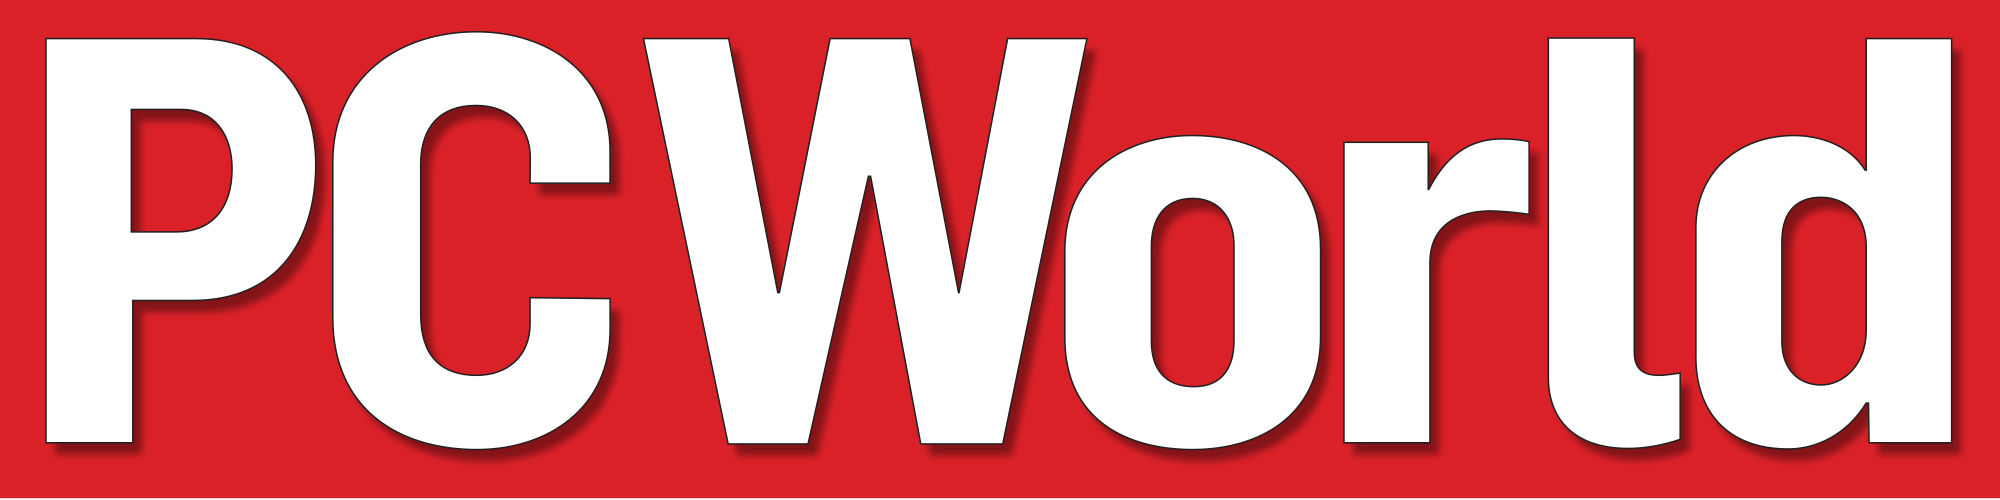 PCWorld-logo